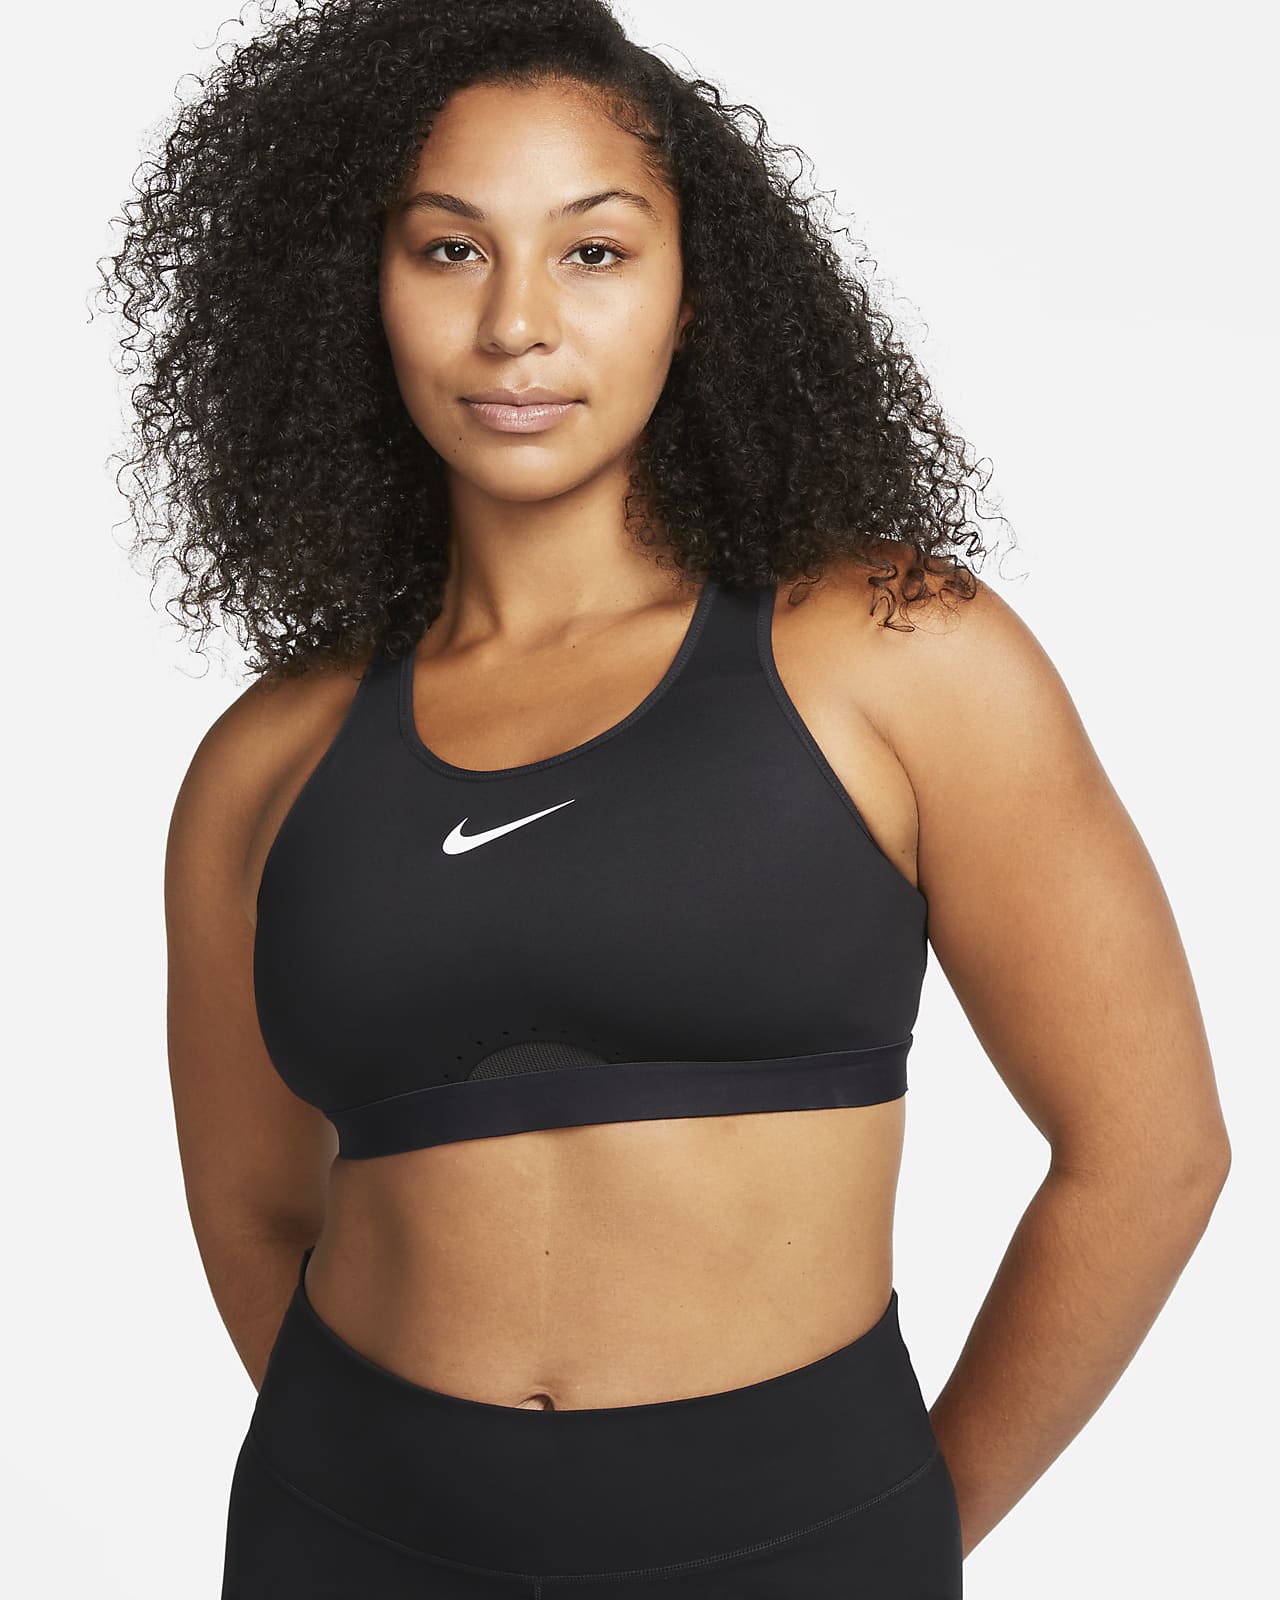 Nike Swoosh Dri-FIT Women's Sports Bra - Black/White